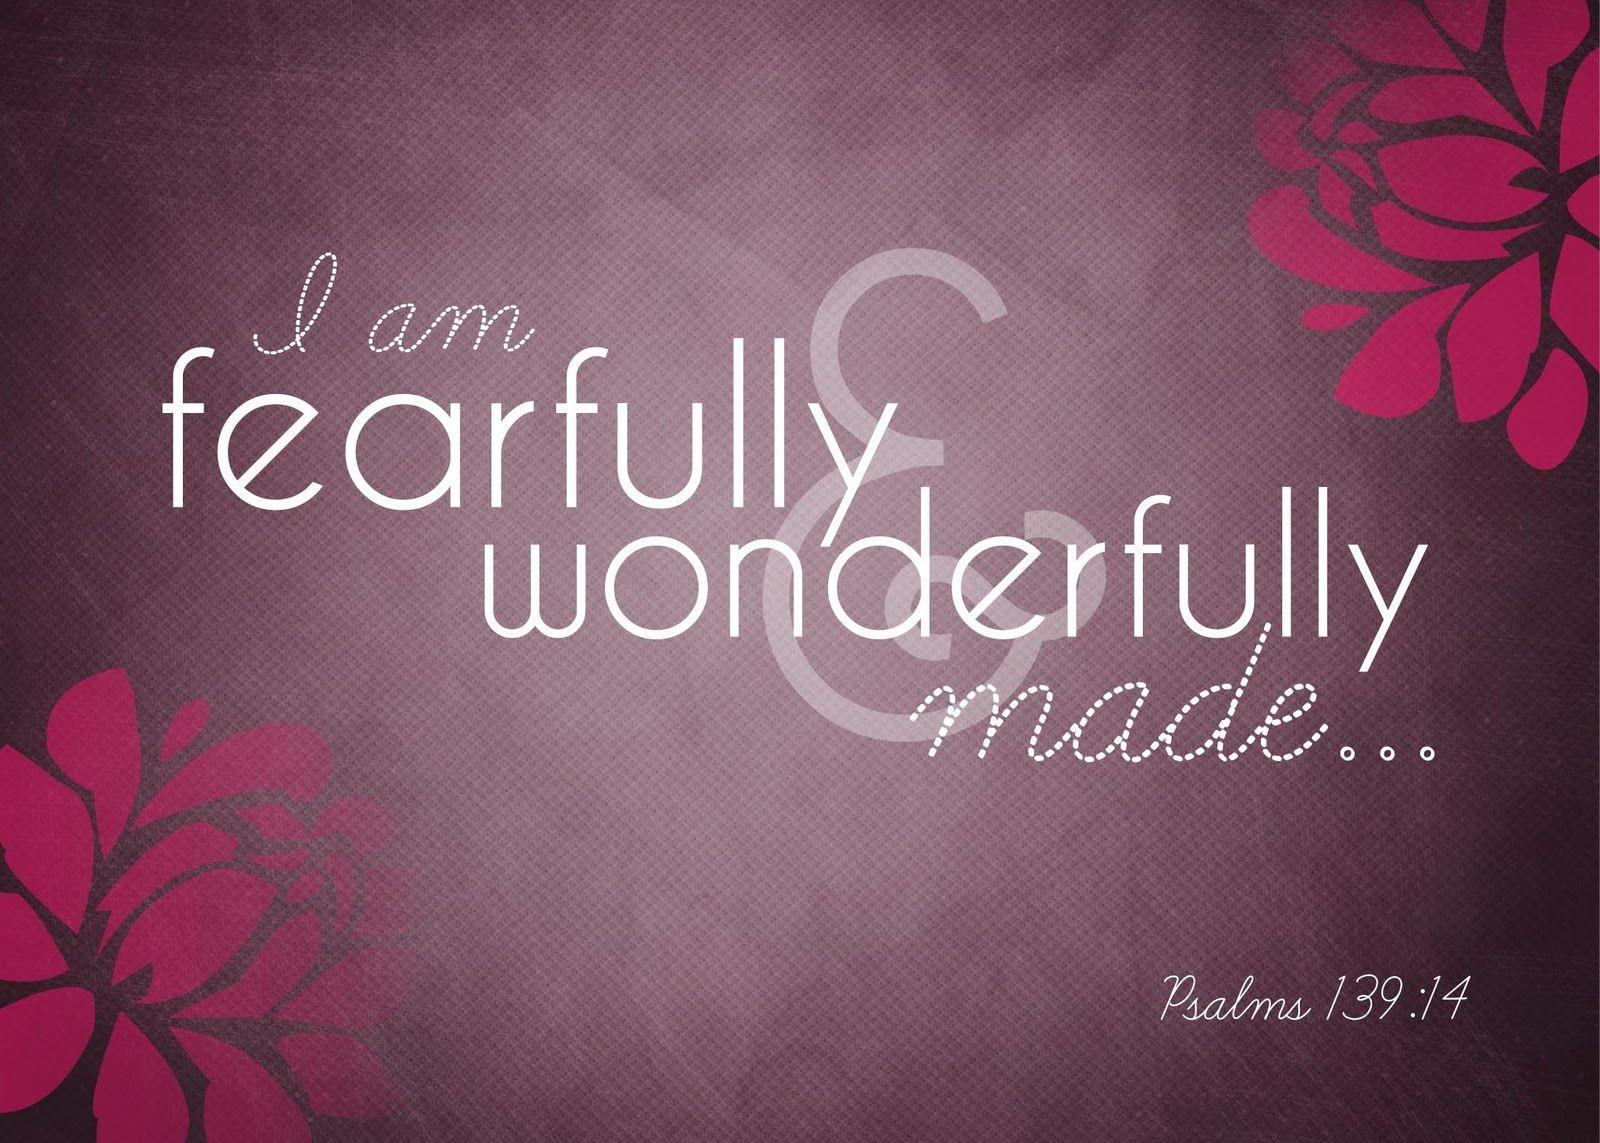 Fearfully wonderfully made